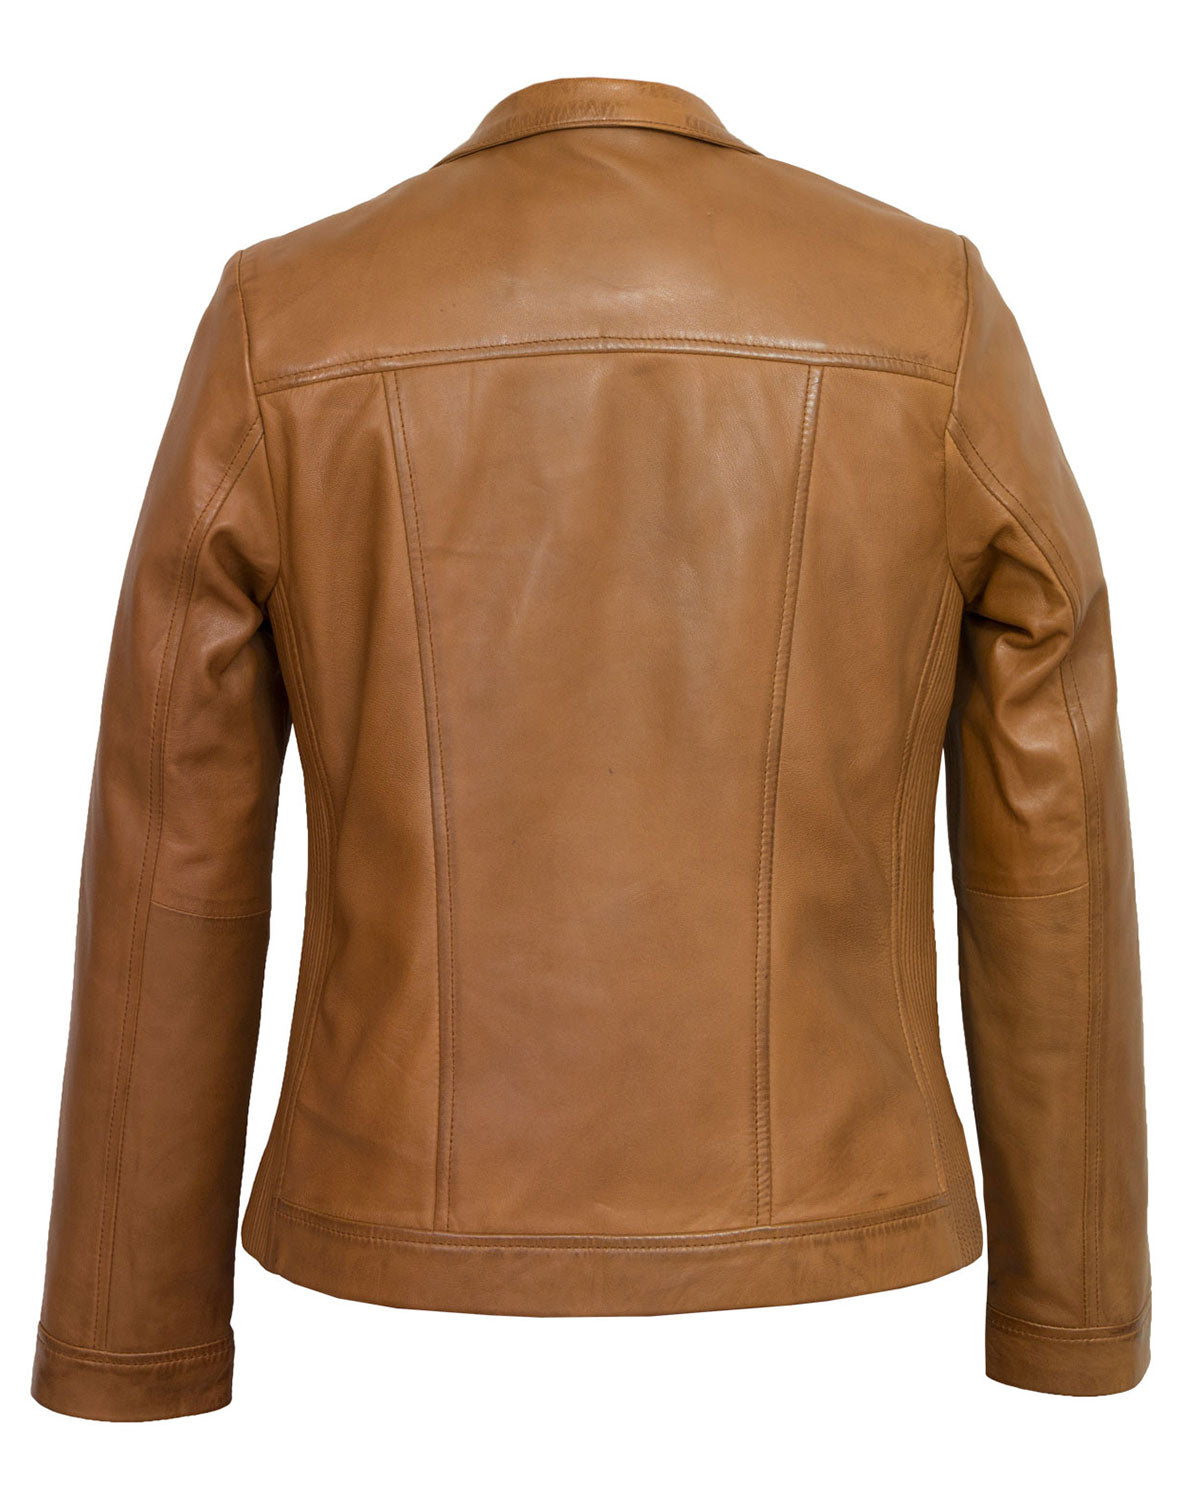 Elite Women’s Tan Leather Jacket